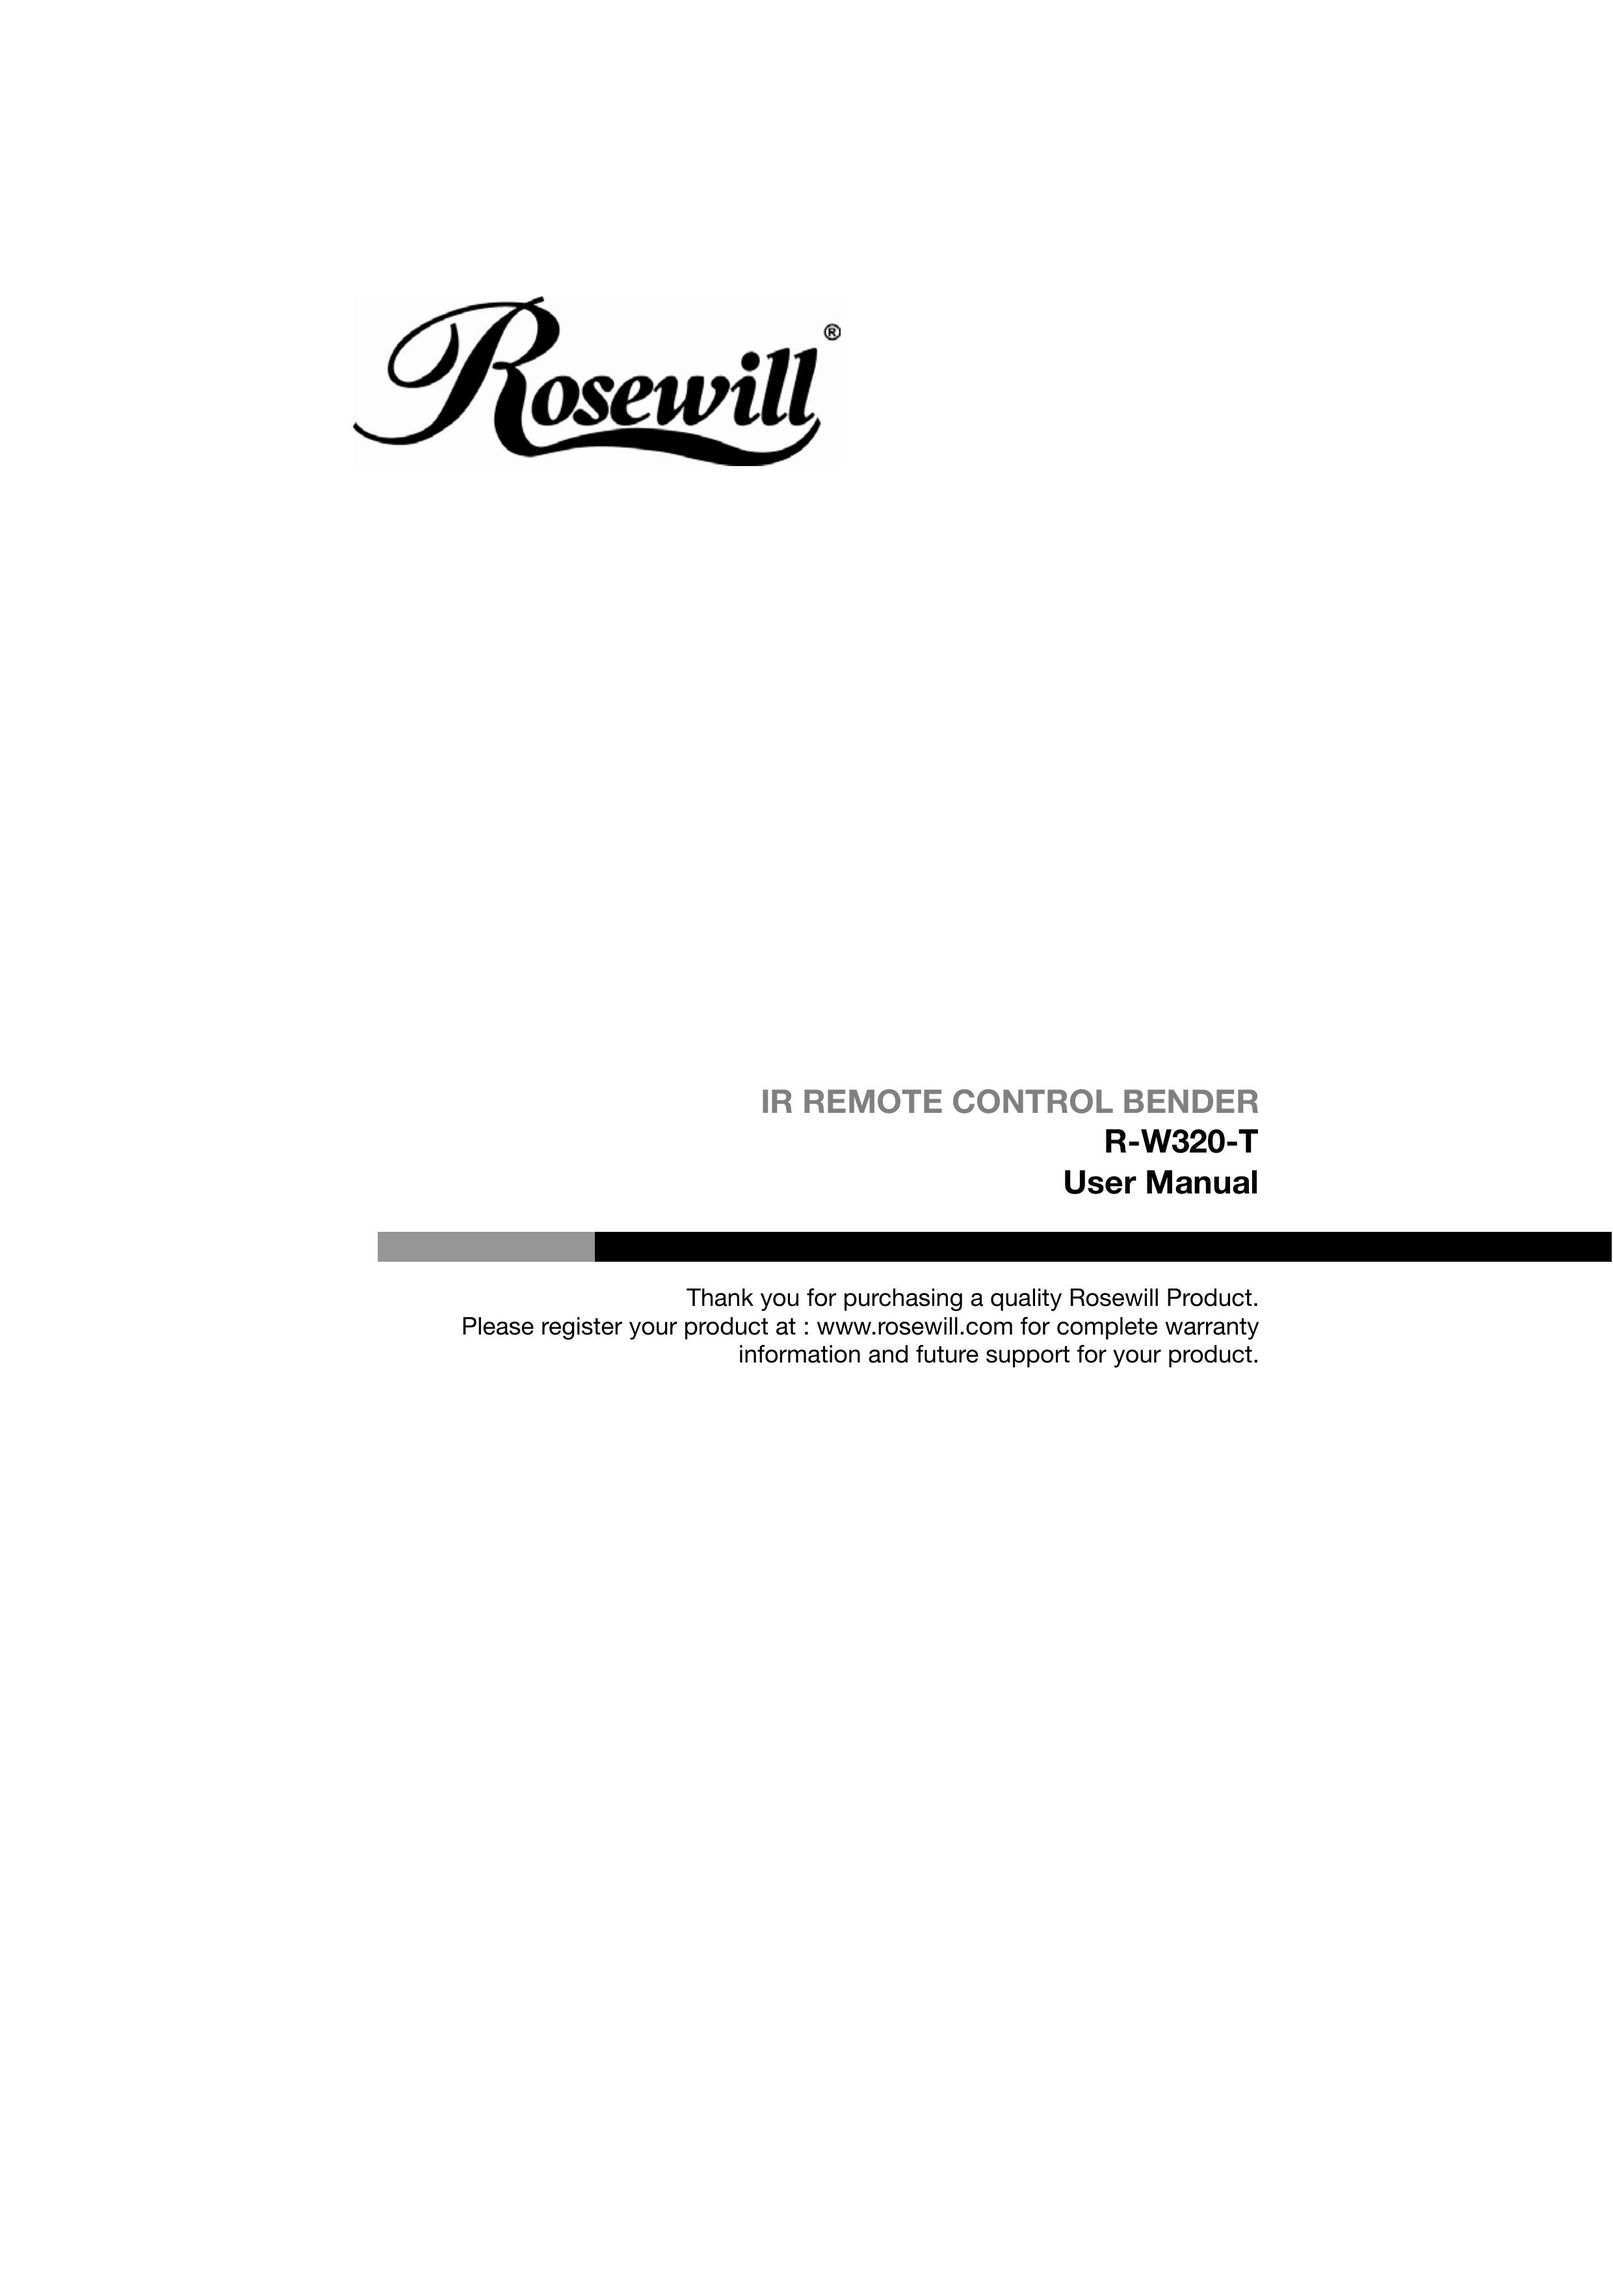 Rosewill R-W320-T Blender User Manual